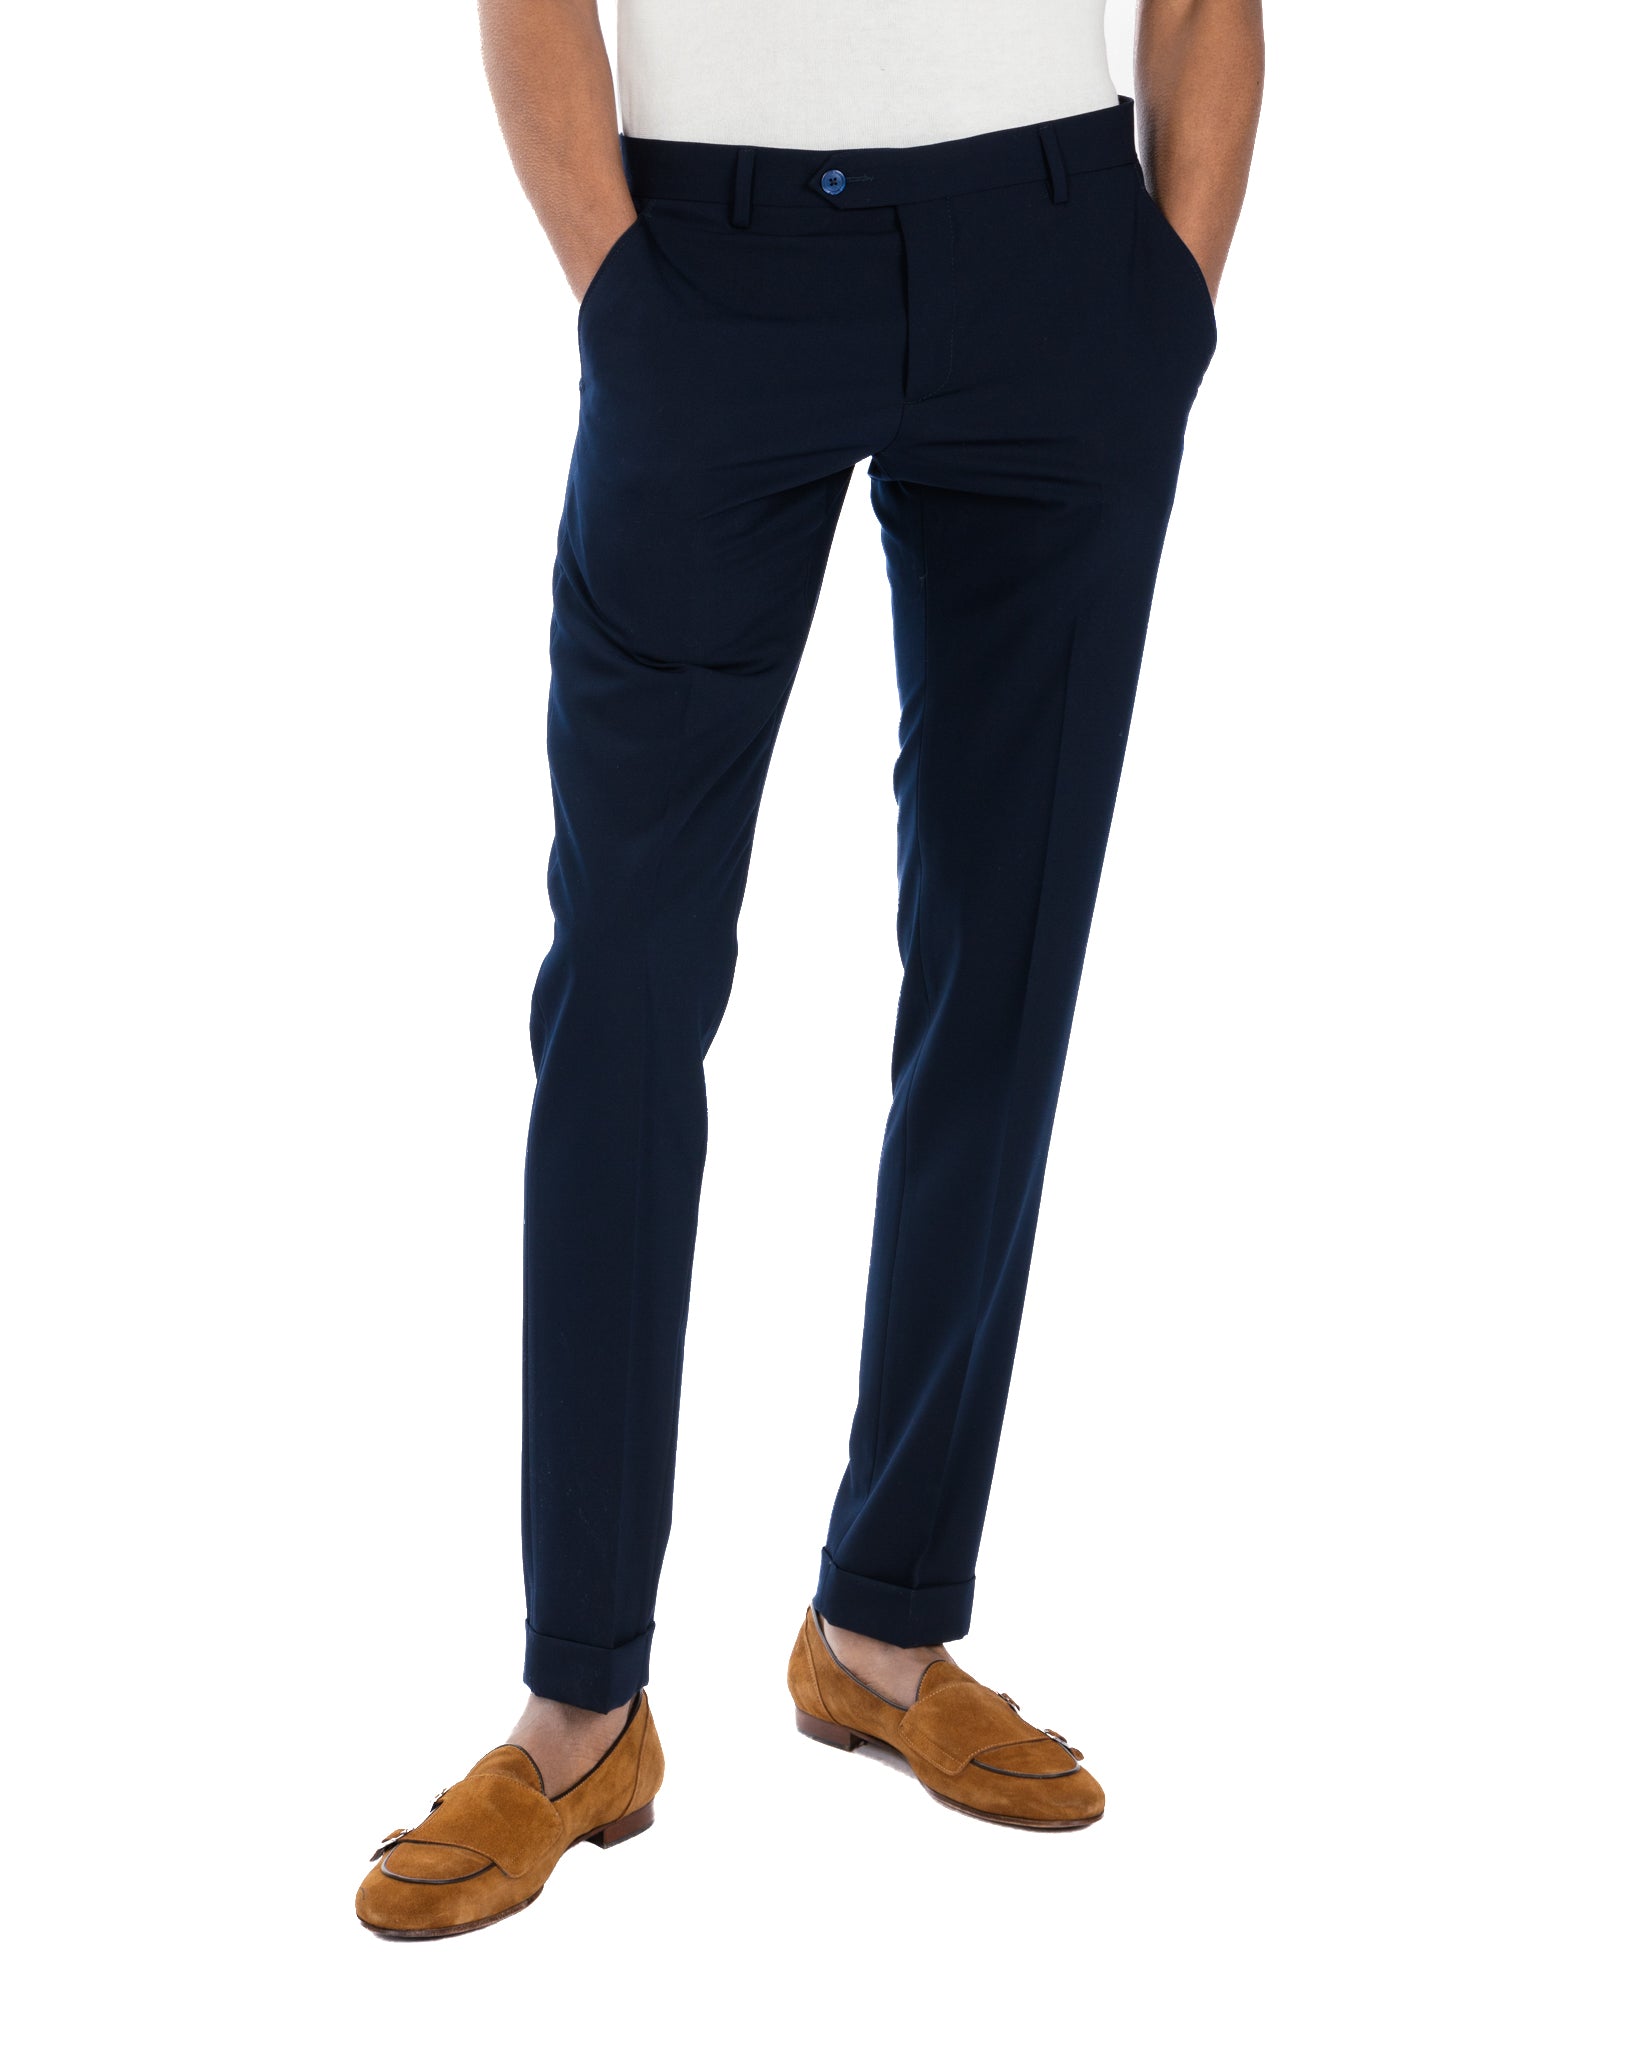 Brema - basic blue trousers